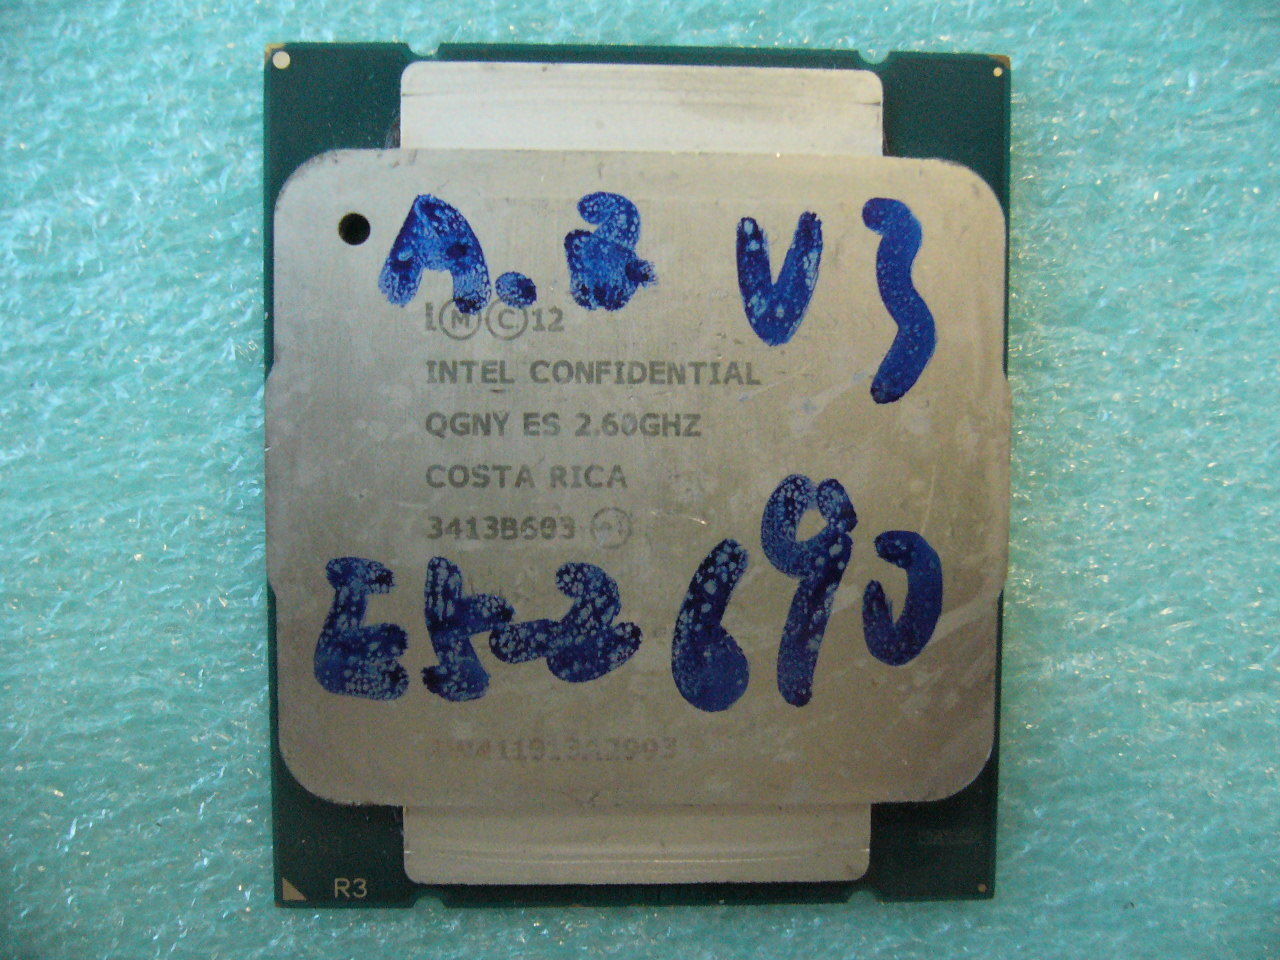 QTY 1x Intel Confidential CPU E5-2690 V3 12-Cores 2.6Ghz LGA2011-3 QGNY PLS READ